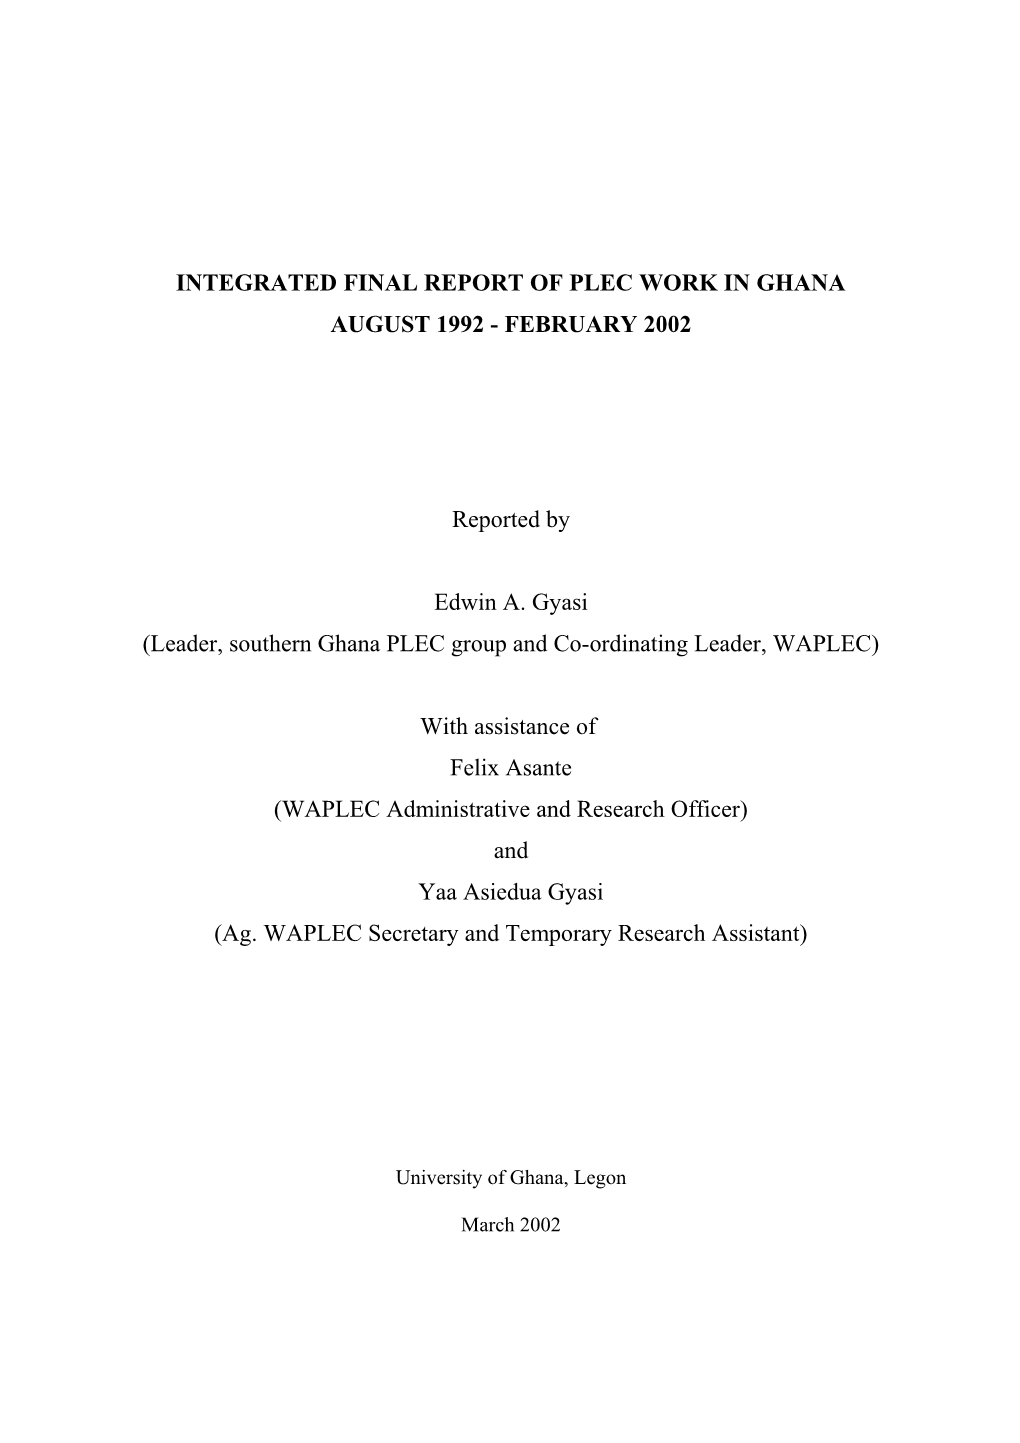 Integrated Final Report of Plec Work in Ghana